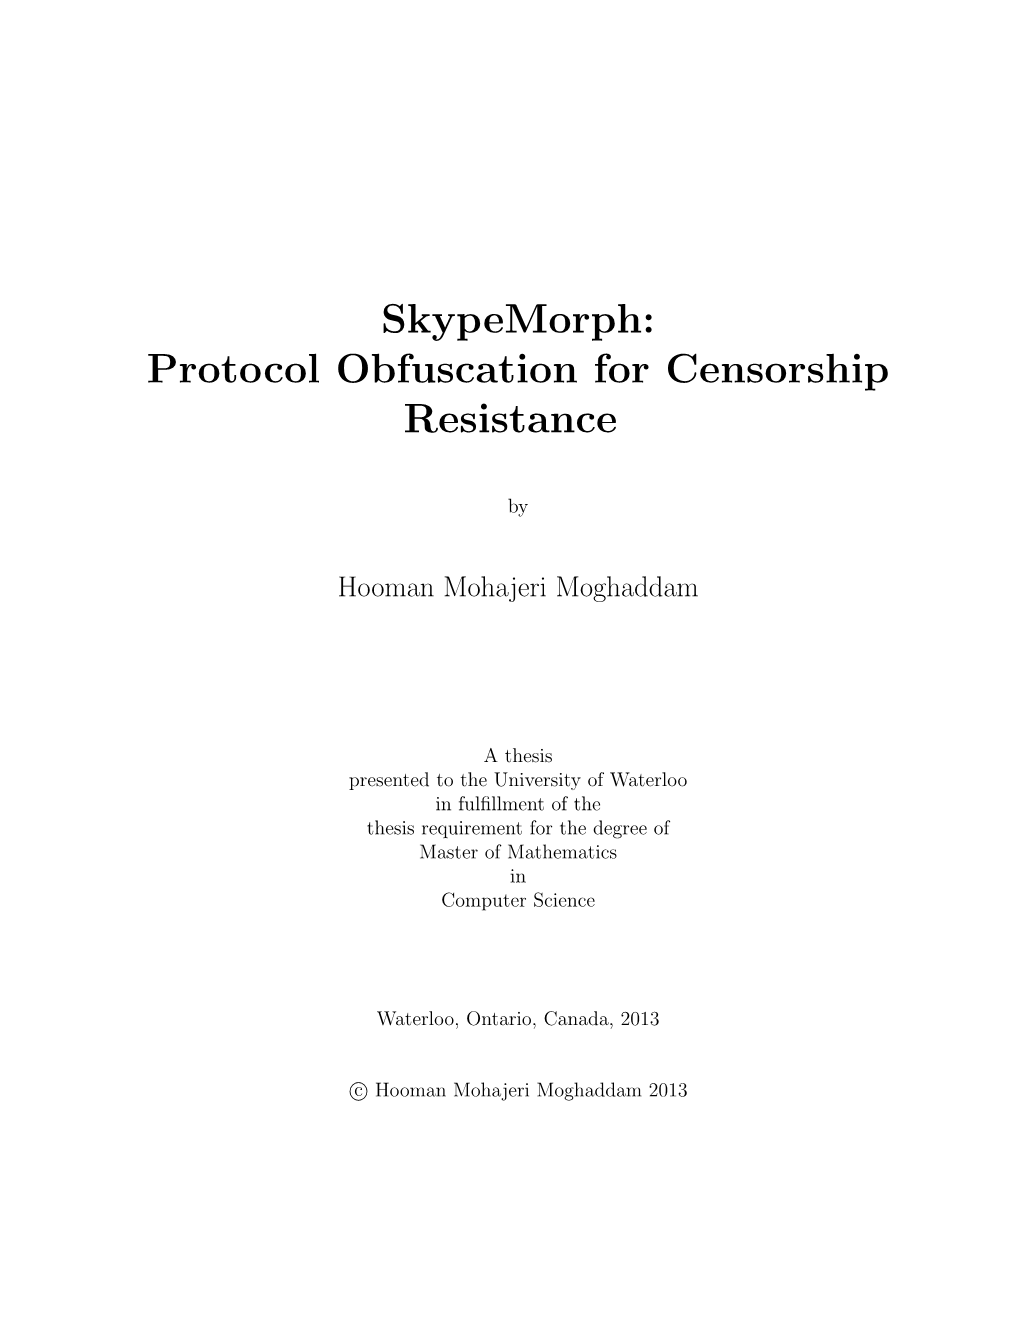 Skypemorph: Protocol Obfuscation for Censorship Resistance